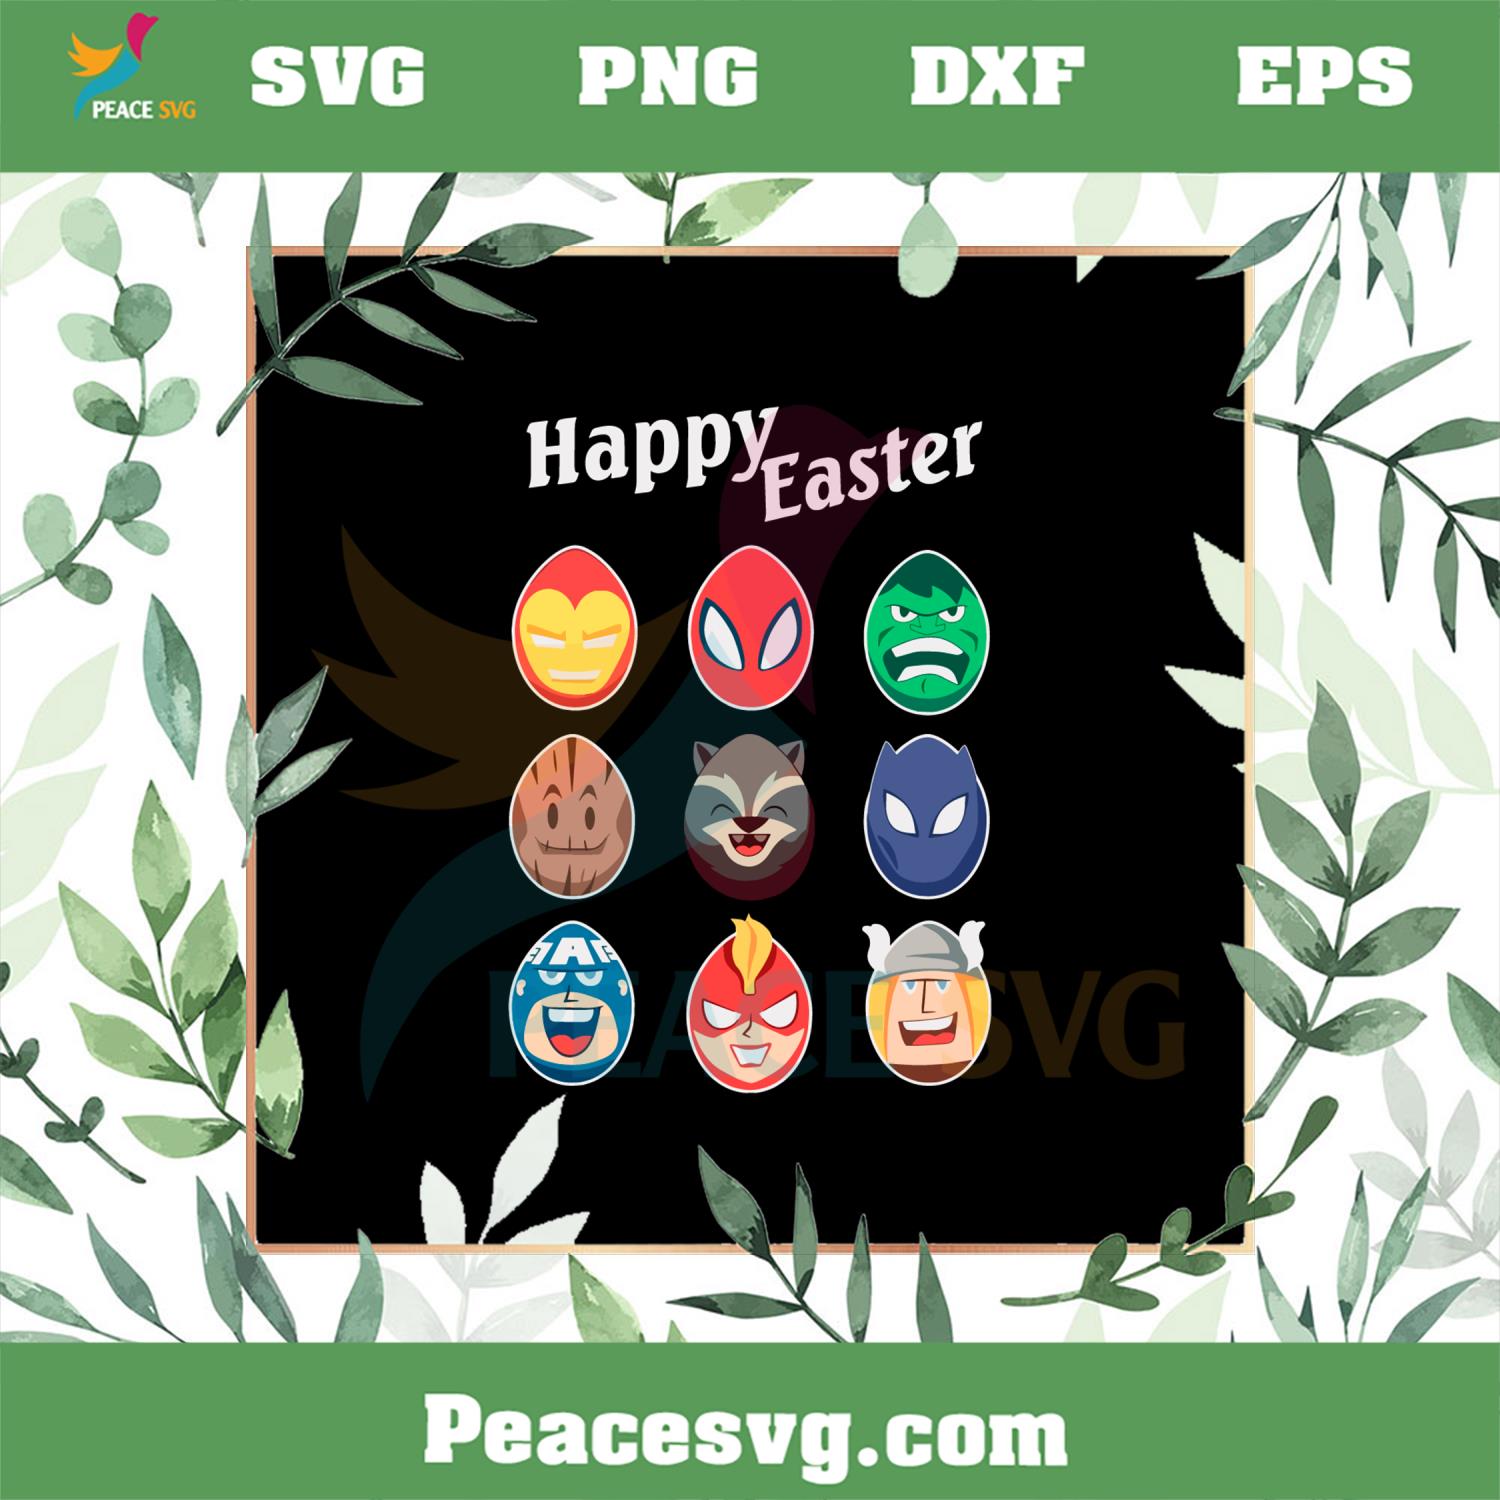 Happy Easter Marvel Avengers Characters SVG Funny Easter Egg SVG